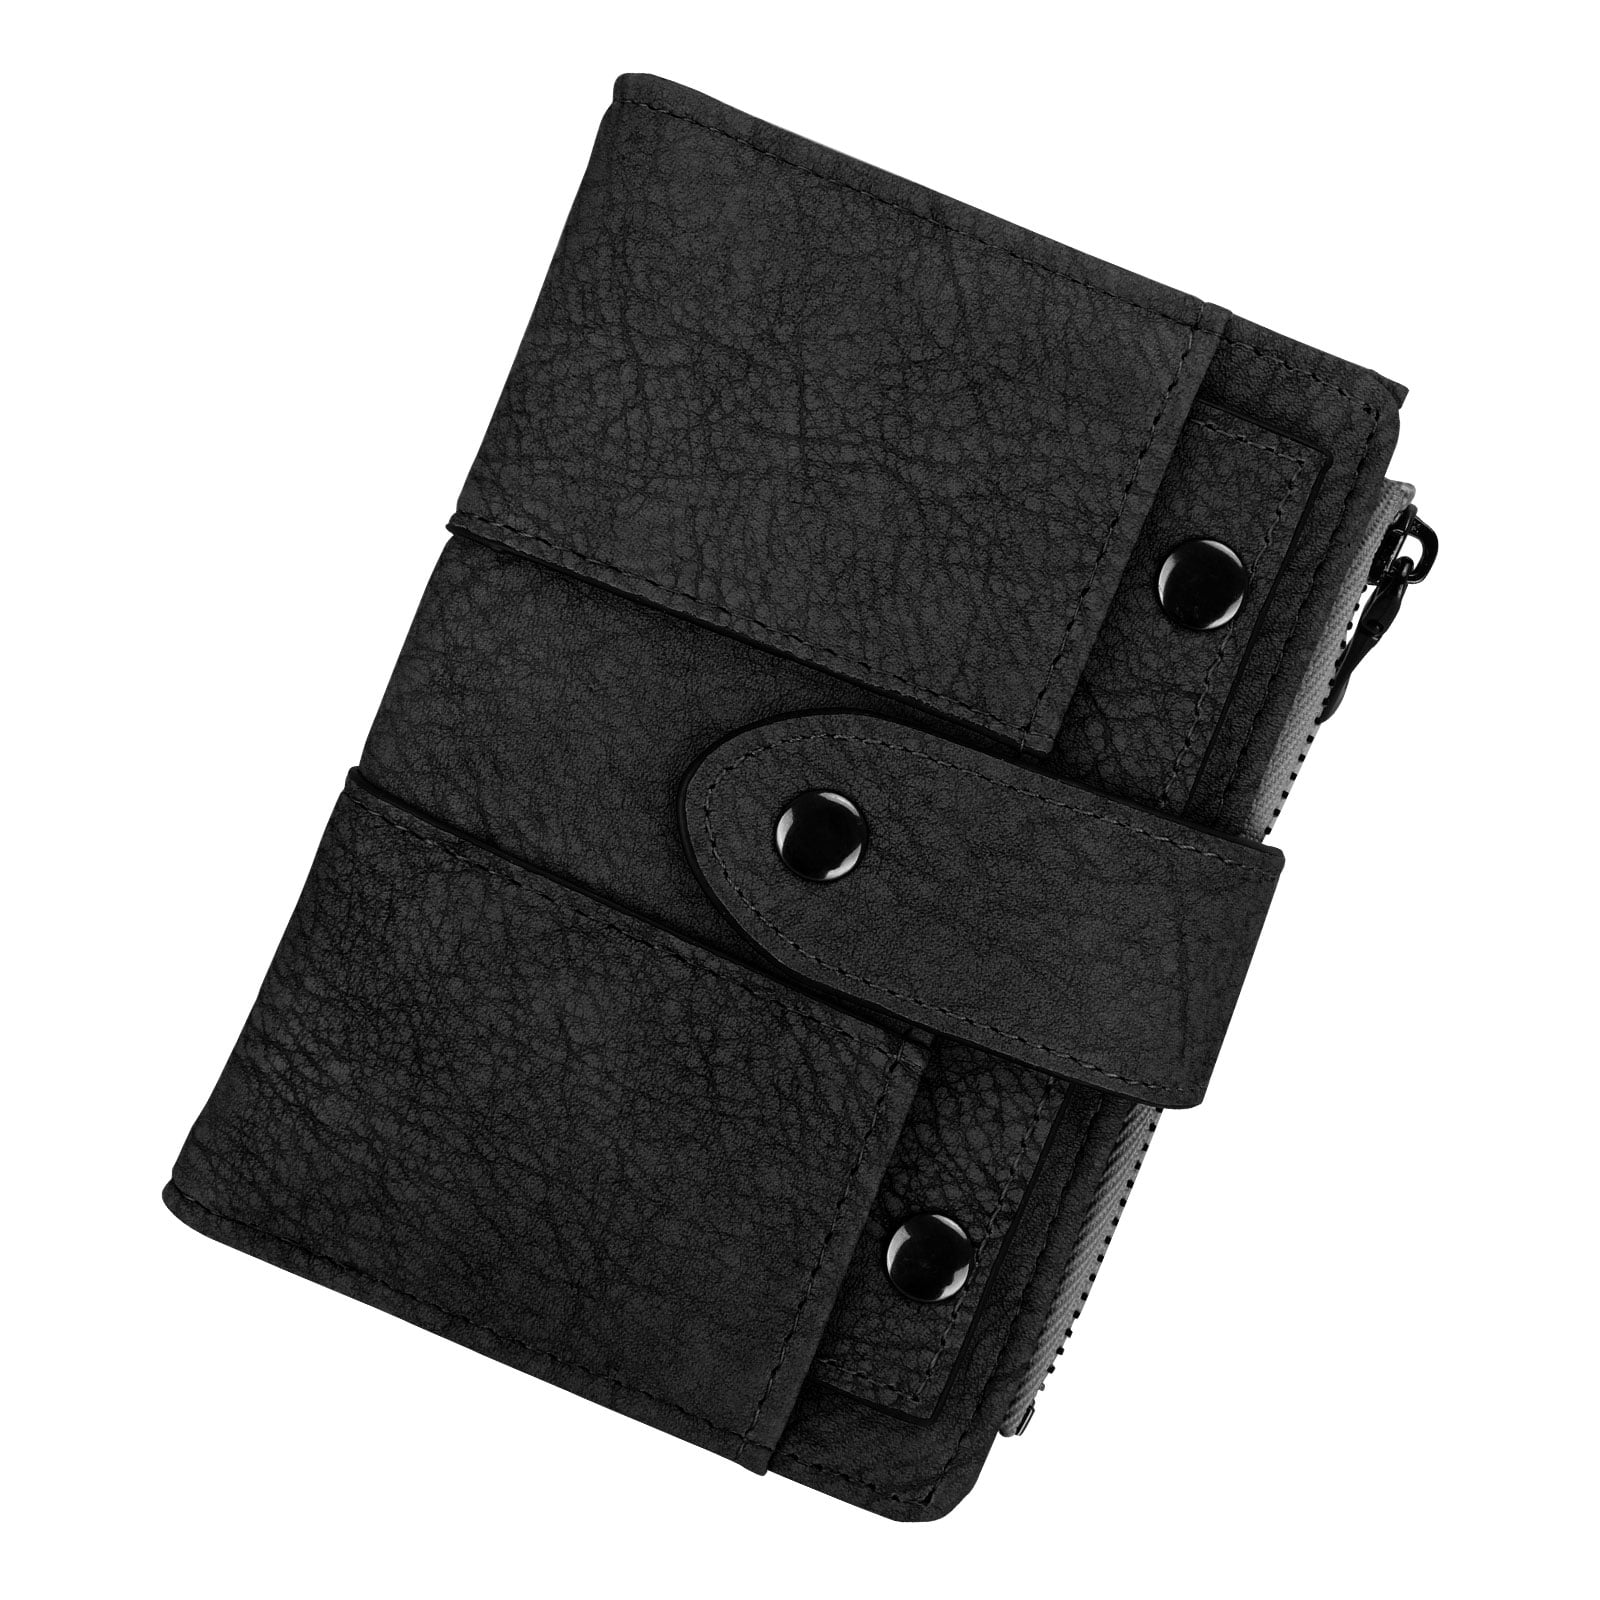 EEEkit - Small Compact Womens Wallet,Zip Leather Wallet,EEEkit PU Leather Clutch Multi Card Case ...